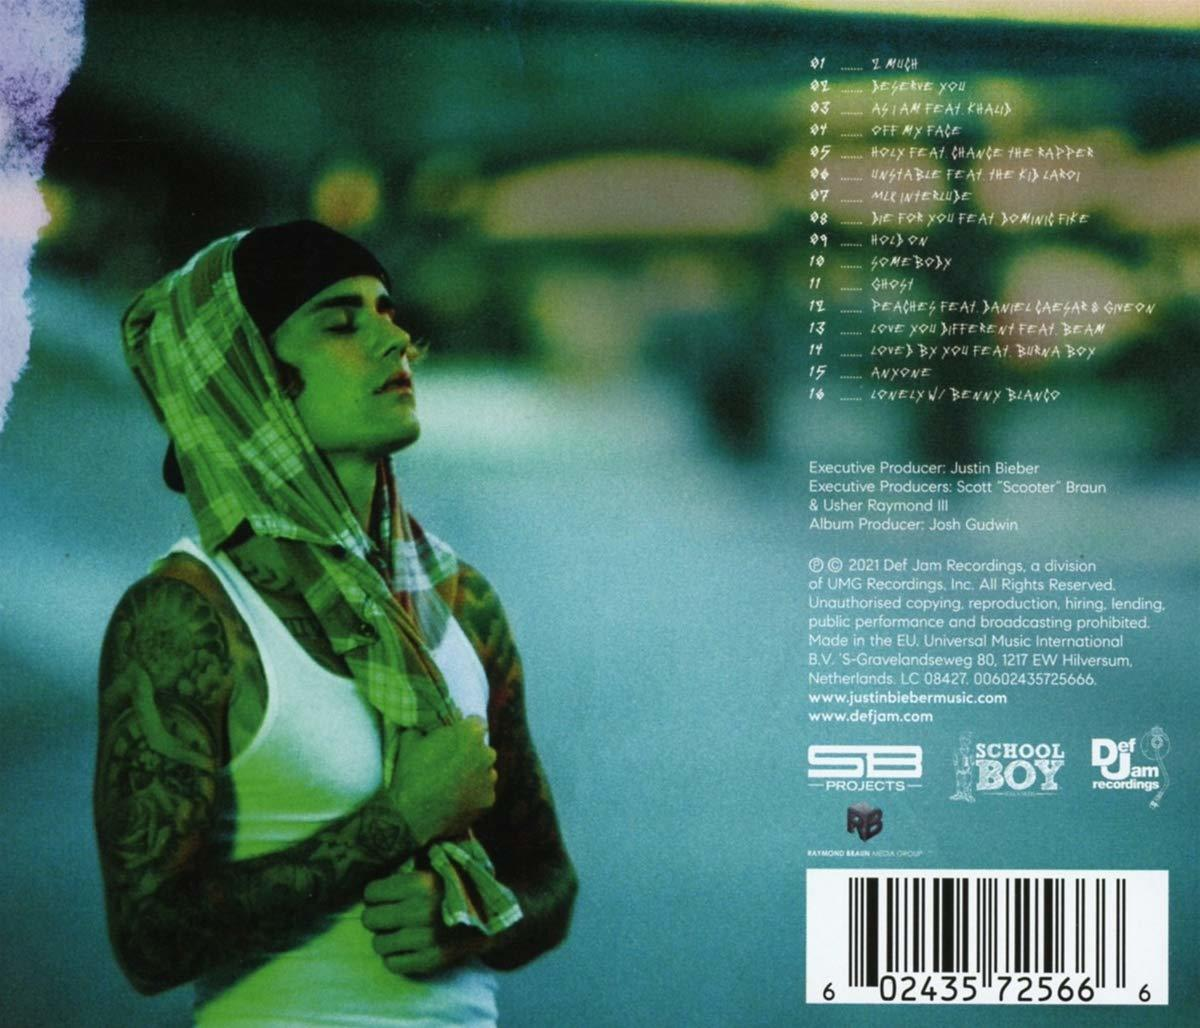 Justin - - Bieber (CD) Justice